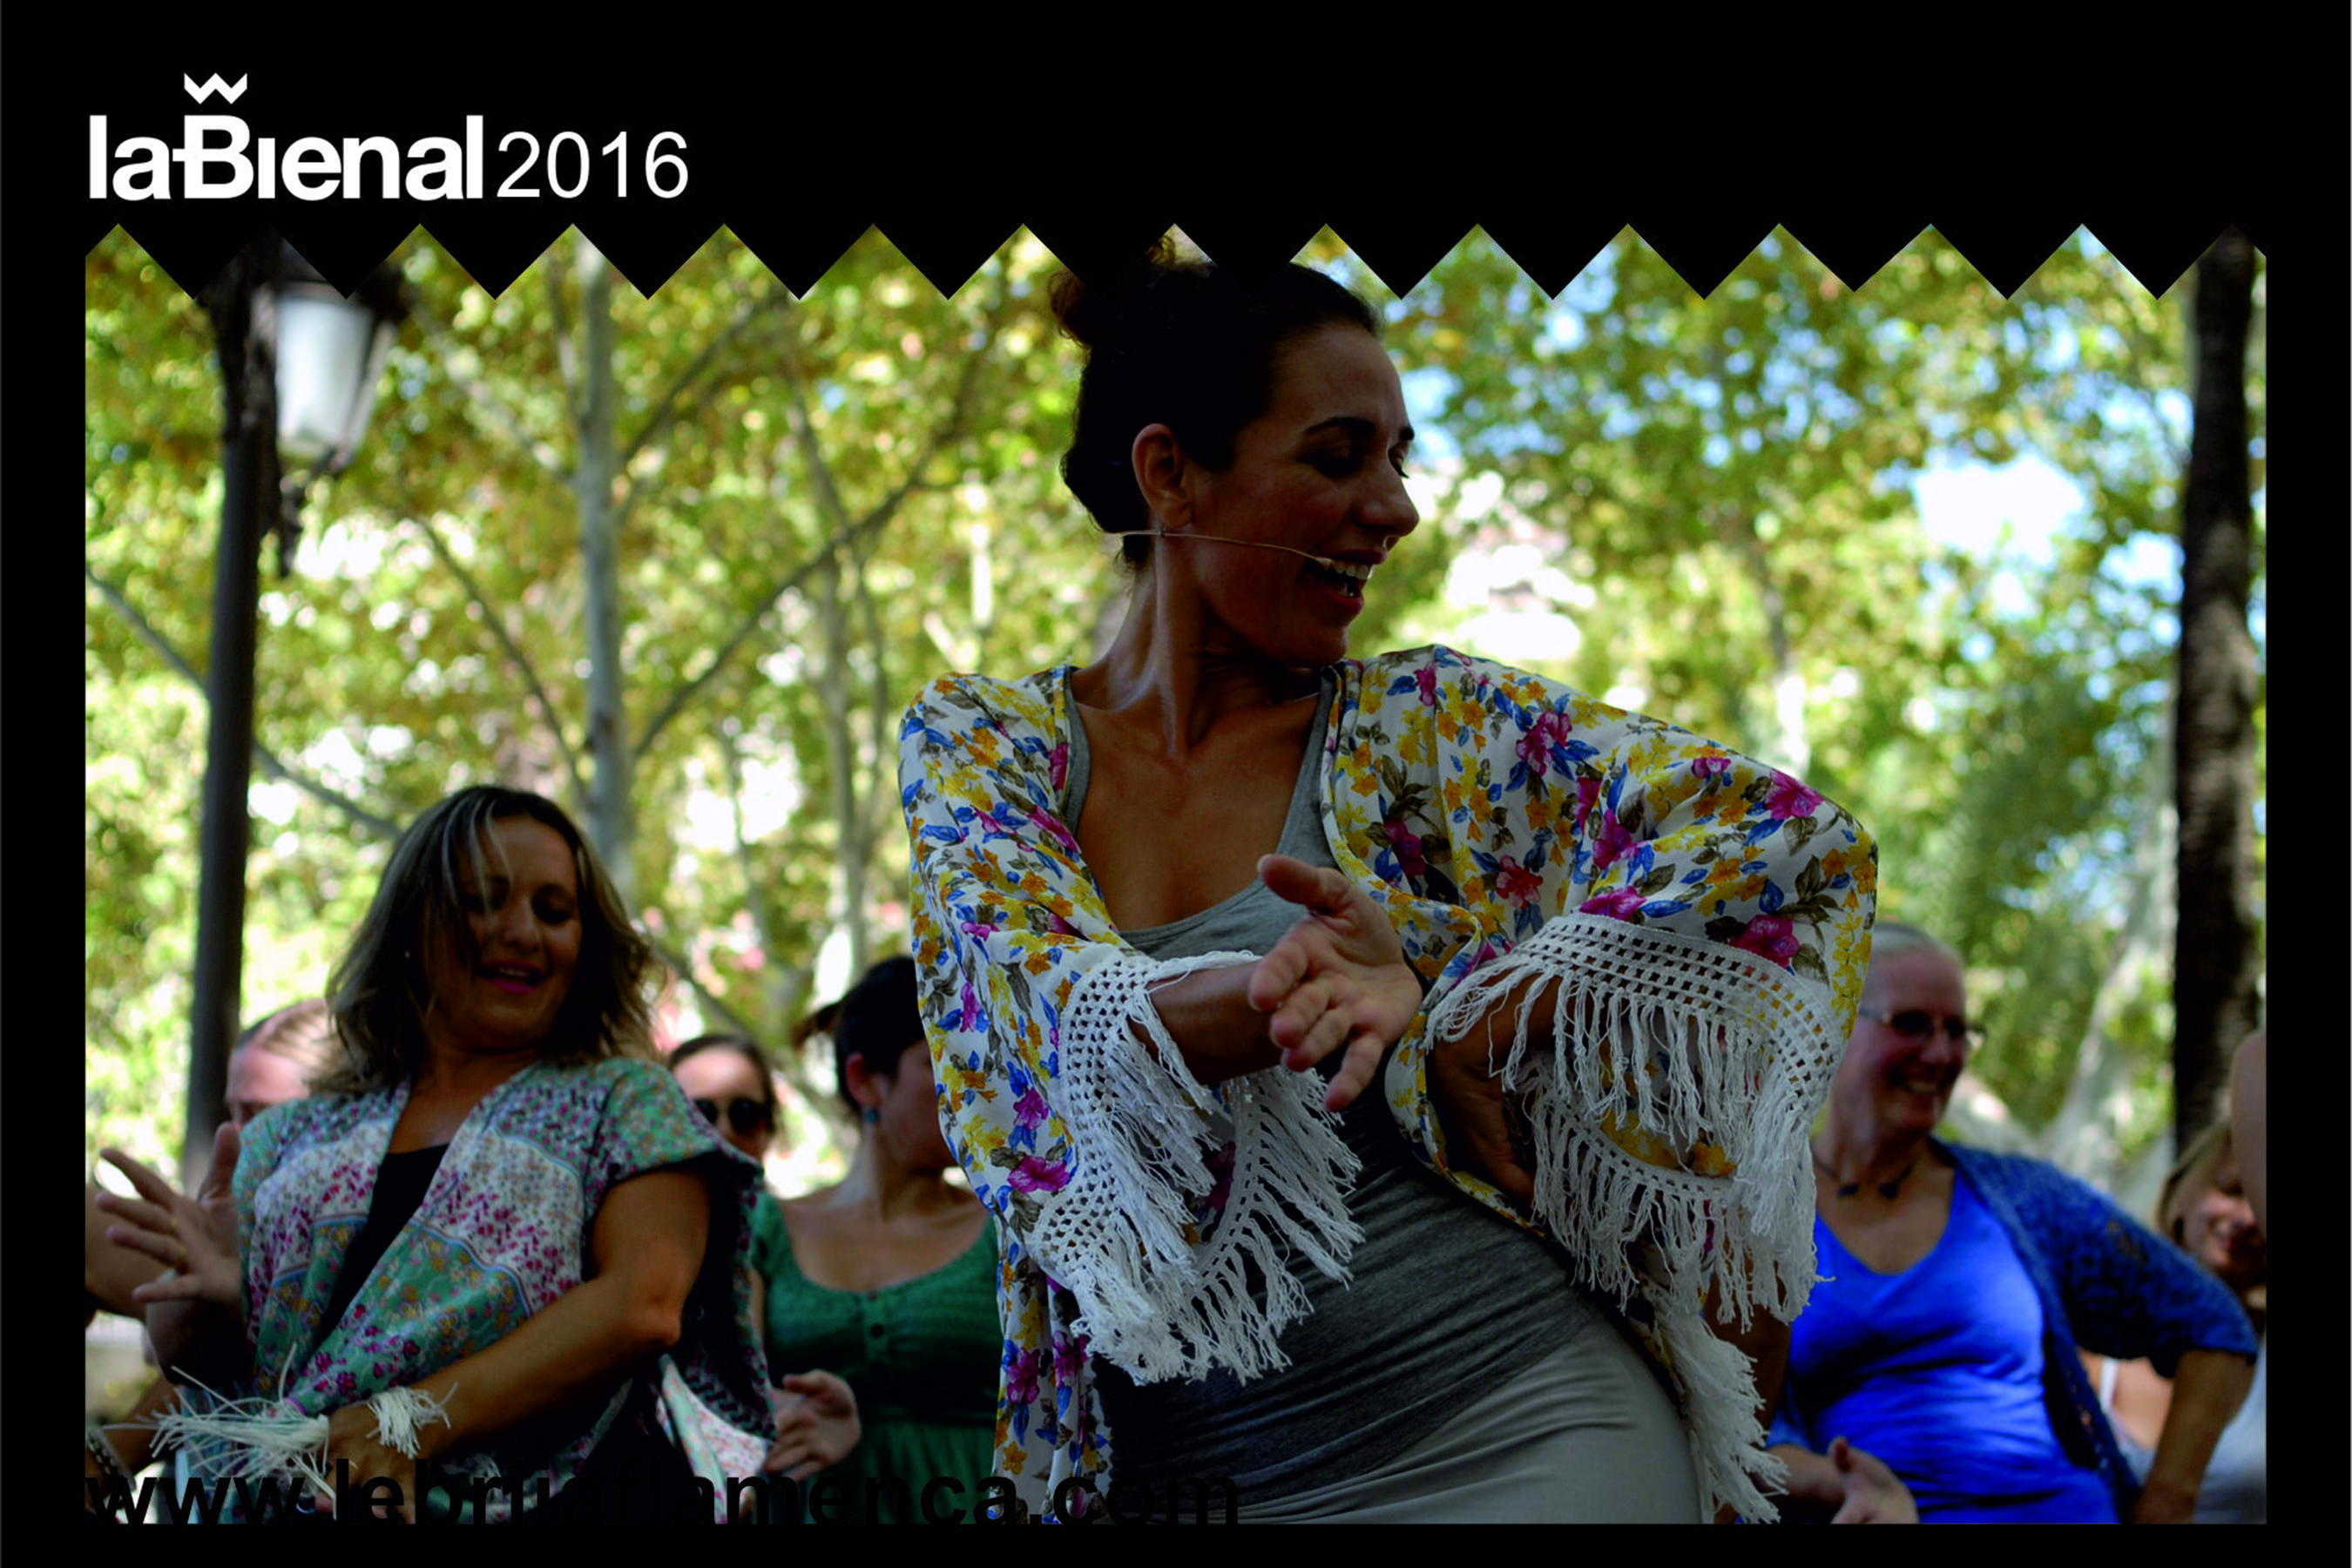 #marcoBienal16 Bienal de Flamenco de Sevilla 2016